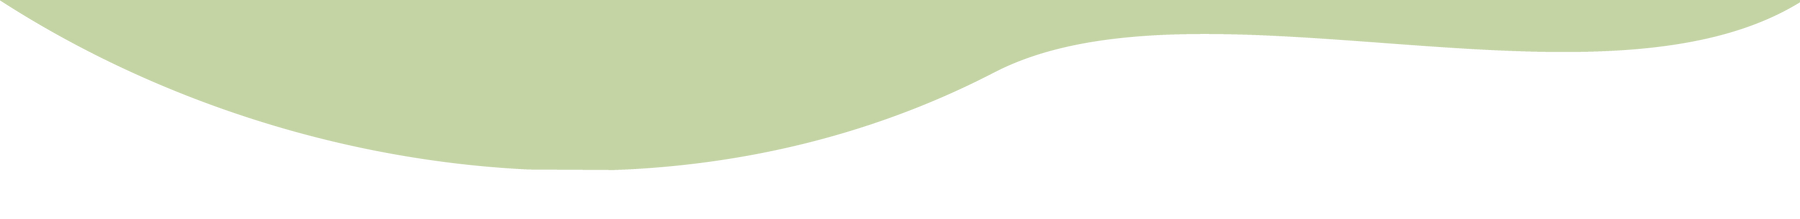 green background wave shape